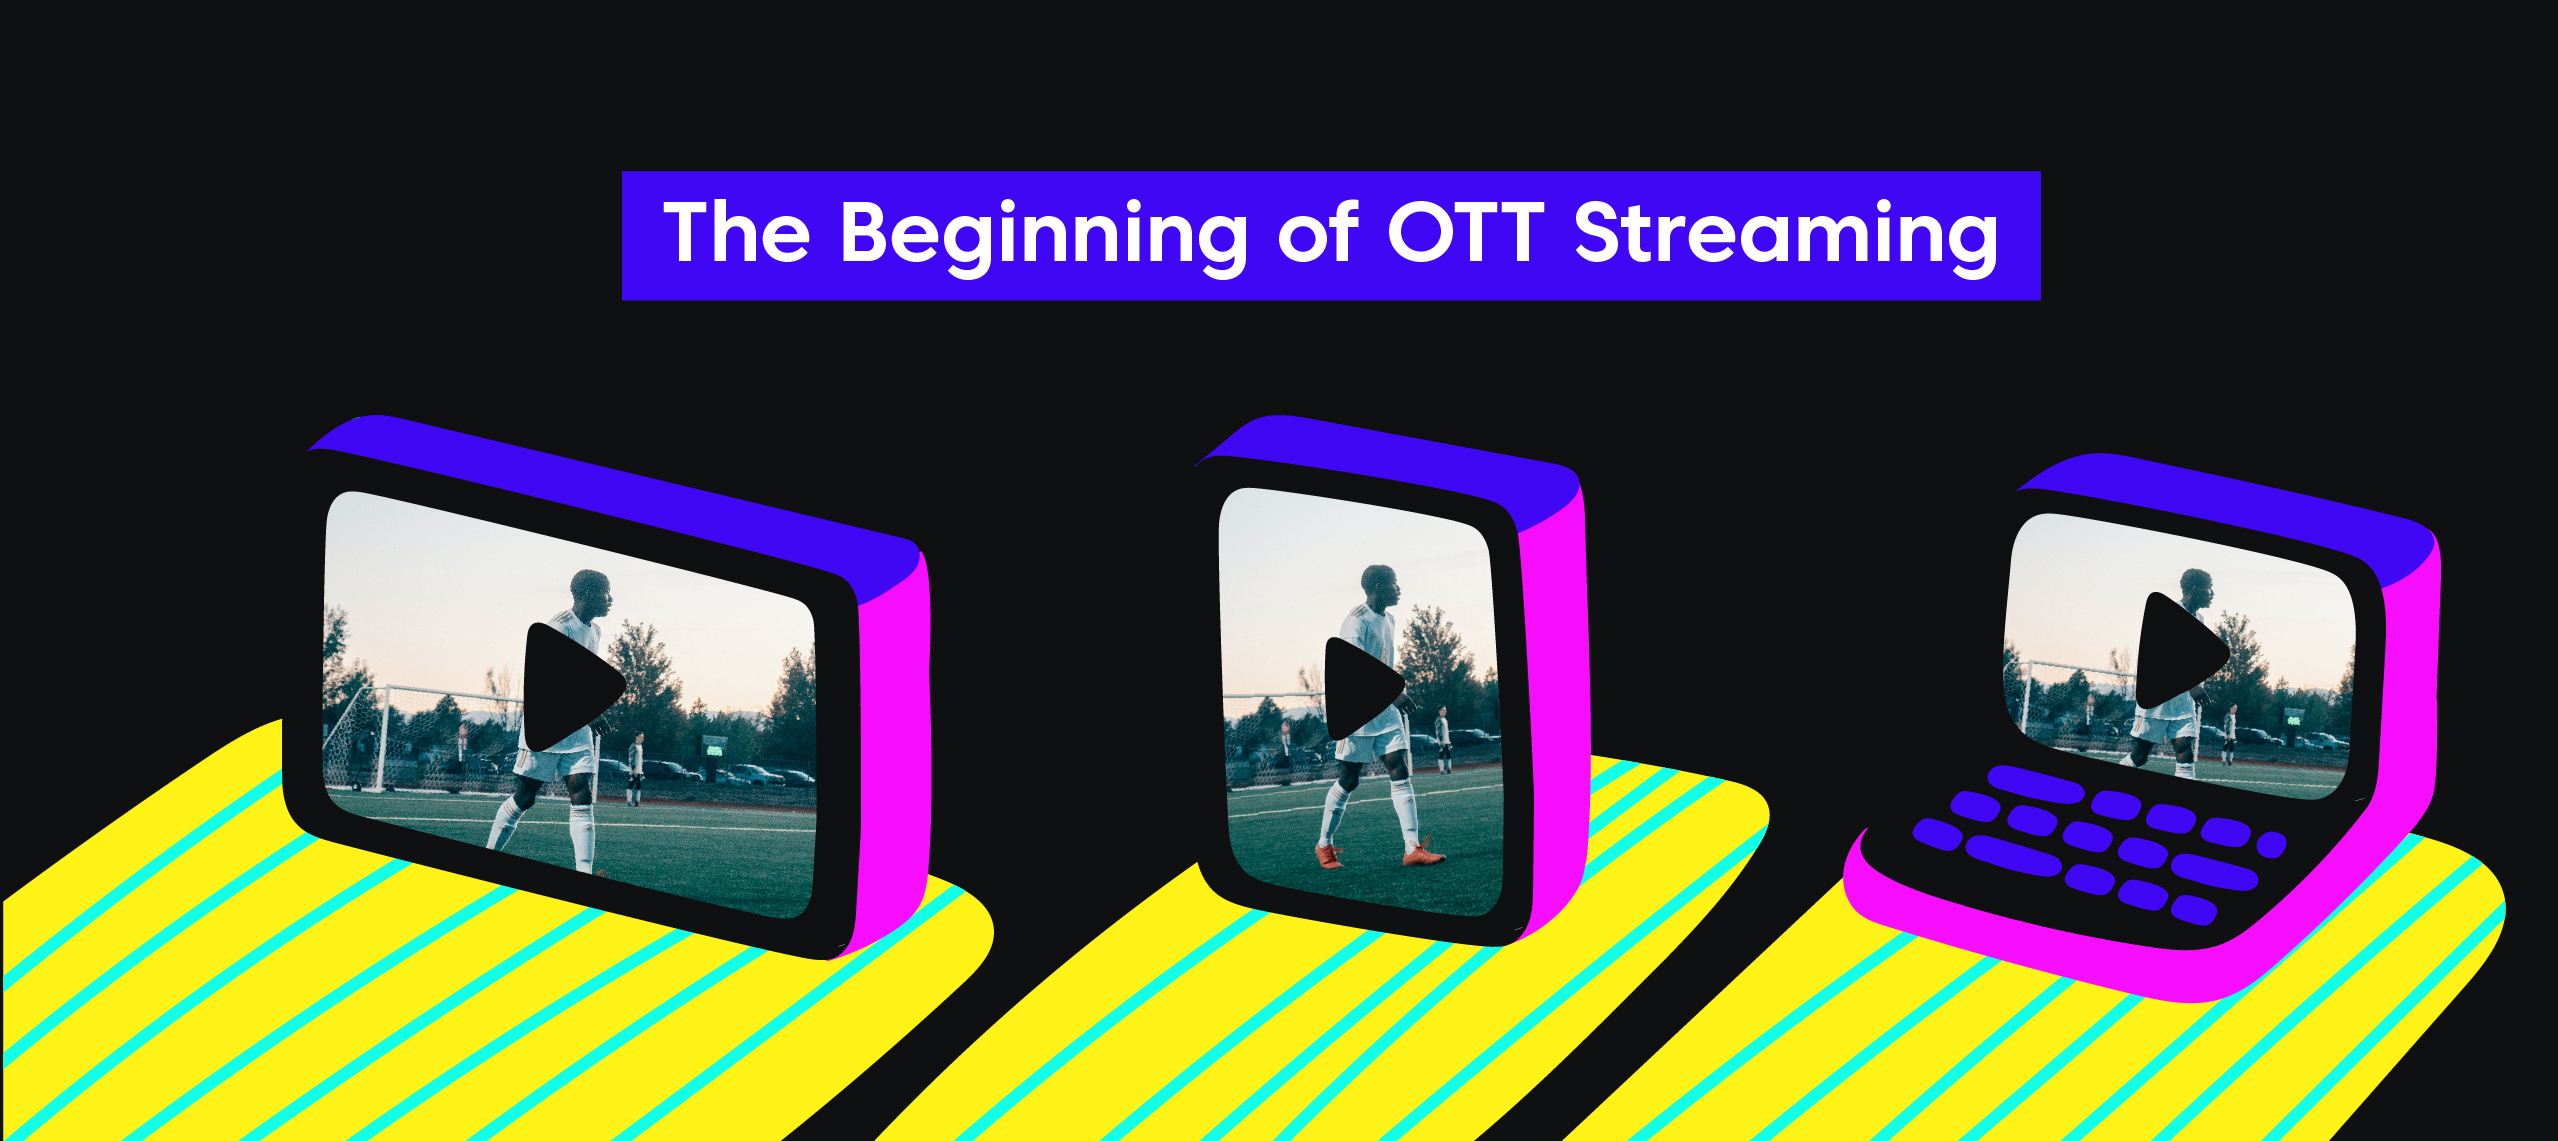 The beginning of OTT streaming